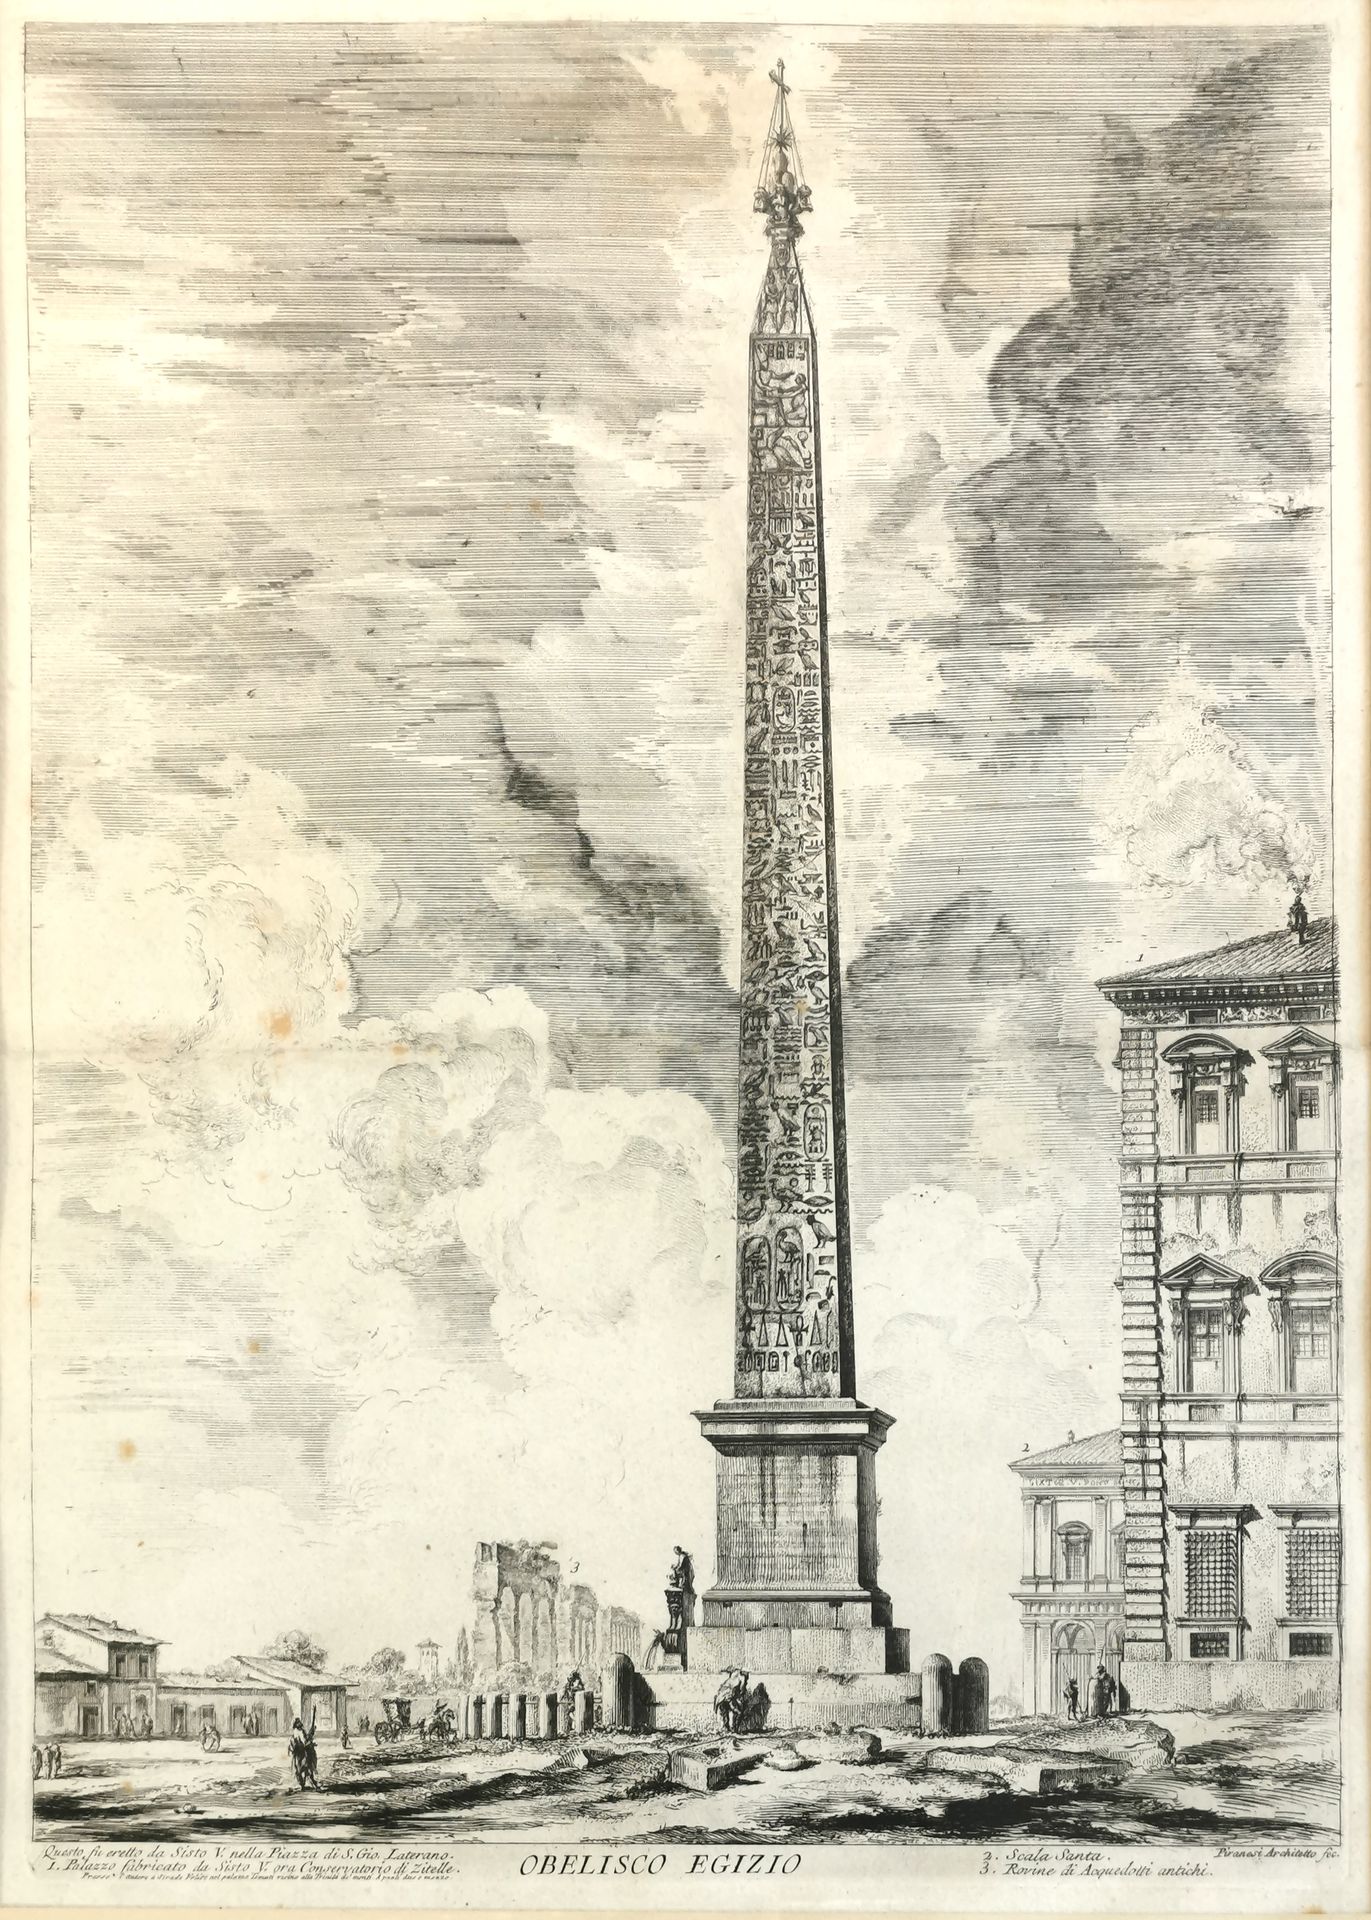 Null Giovanni Battista PIRANESI (1720-1778)

Obelisco Egizio

Eau-forte légendée&hellip;